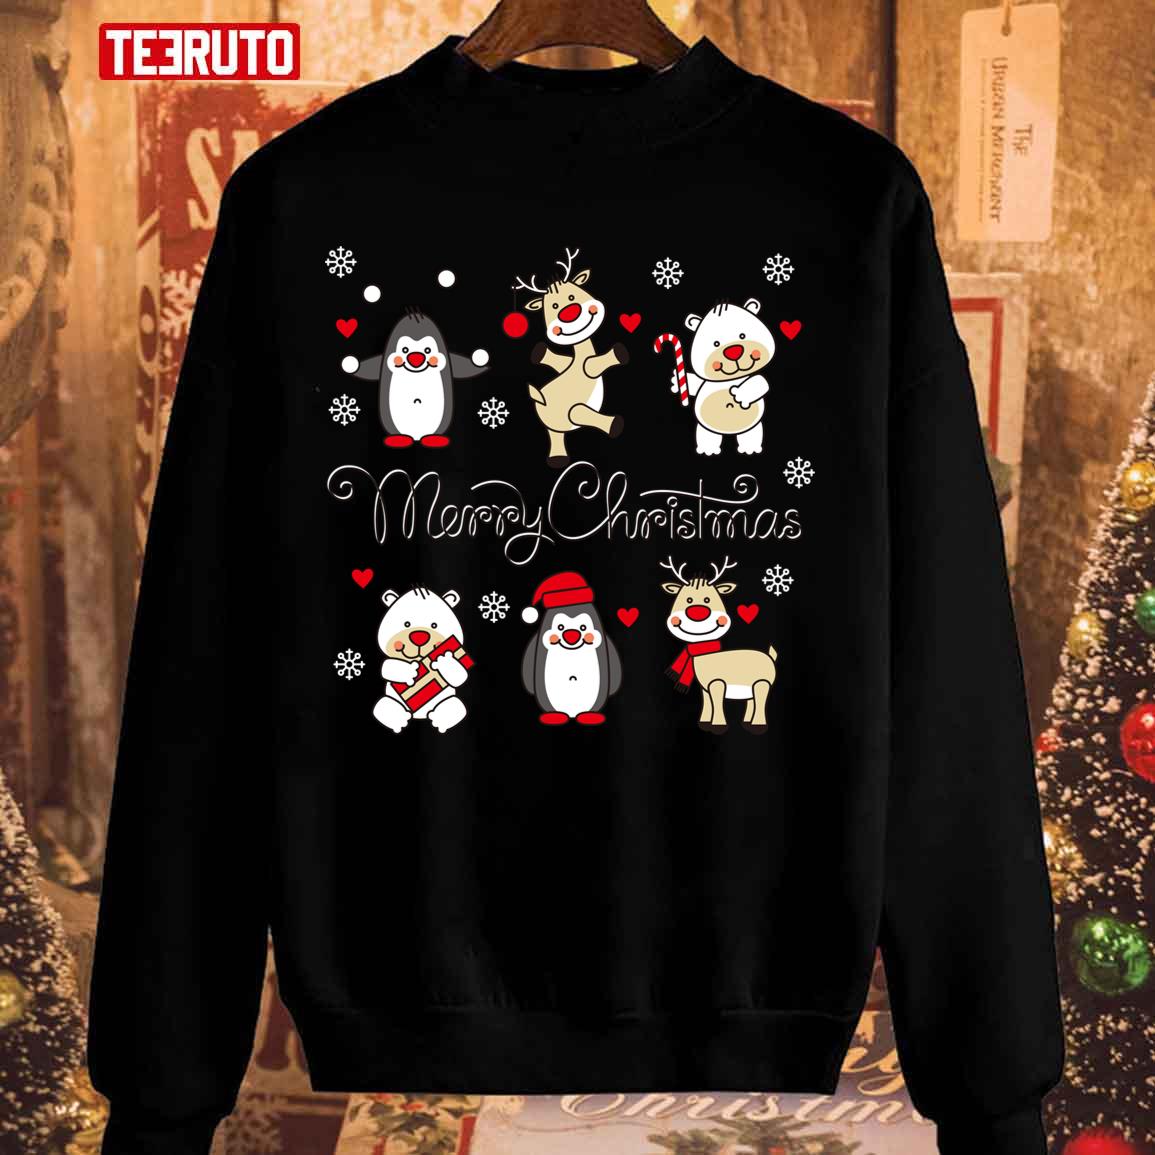 The Beautiful Christmas Has Arrived Unisex Sweatshirt